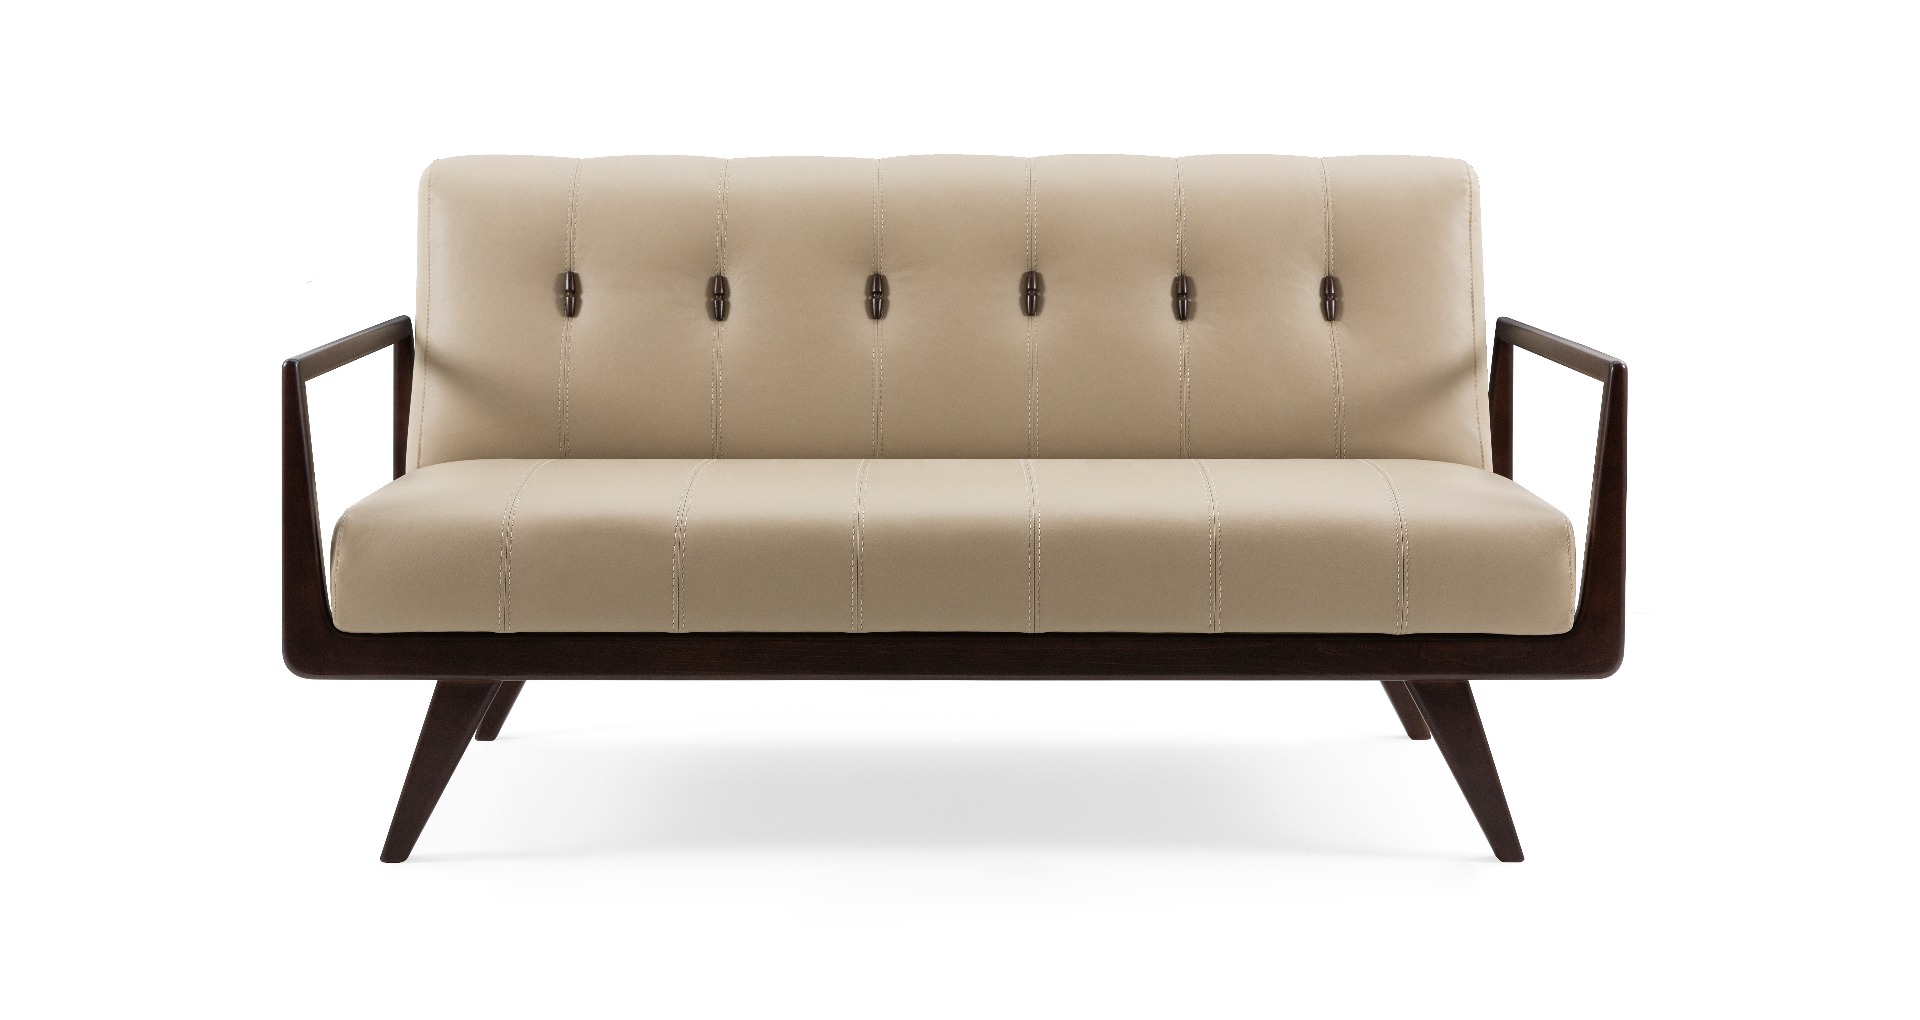 Luxury Capitol custom beige sofa living room furniture by Luxuria London